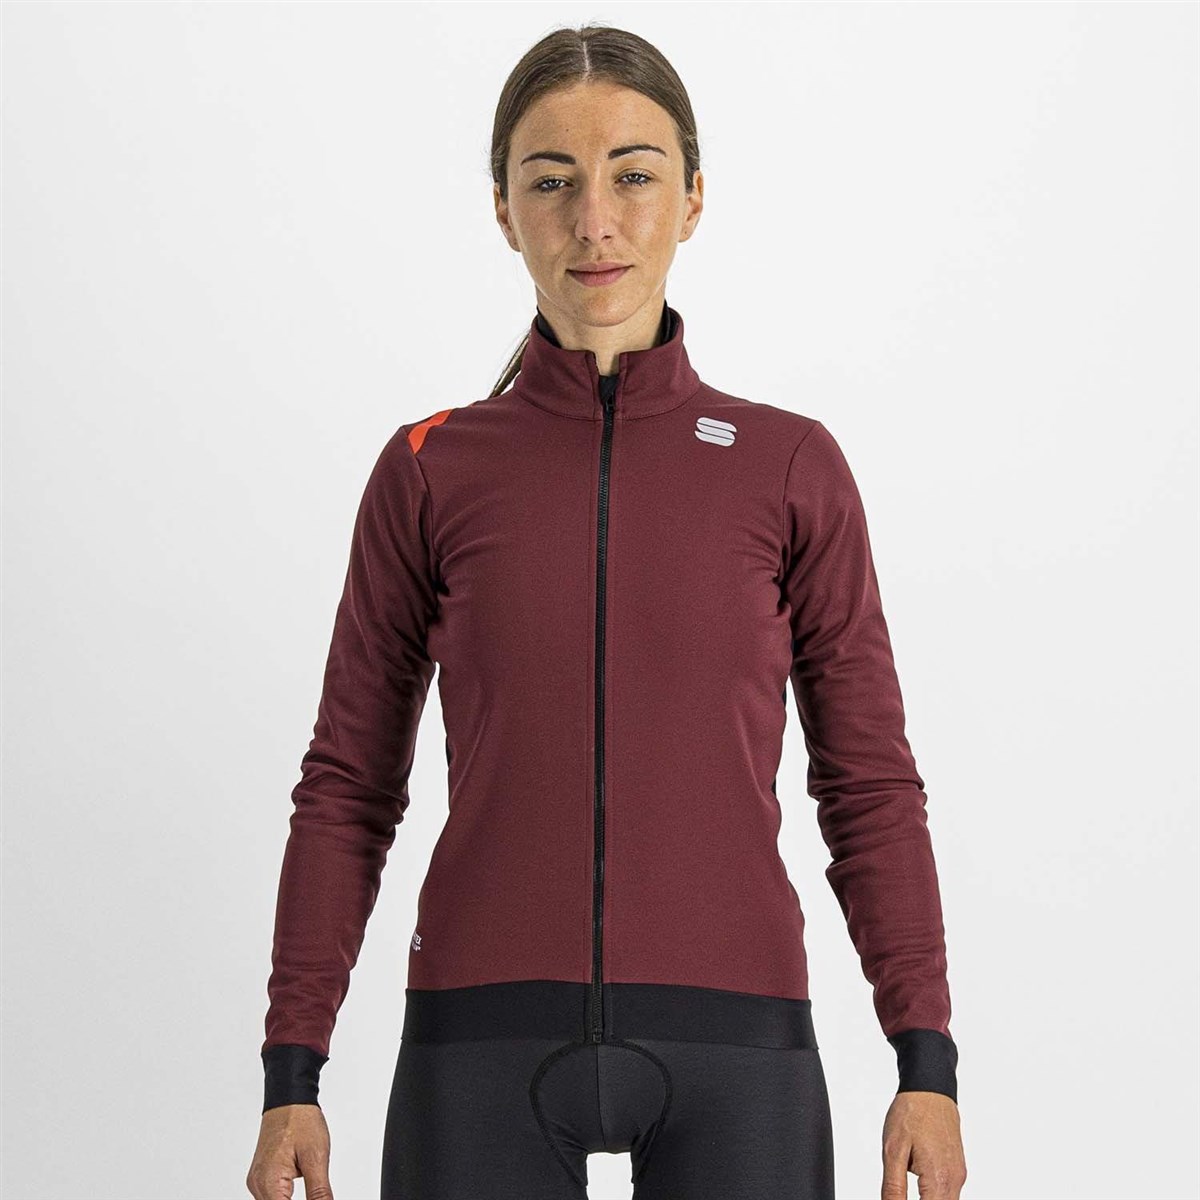 Sportful Fiandre Medium Womens Long Sleeve Cycling Jacket product image